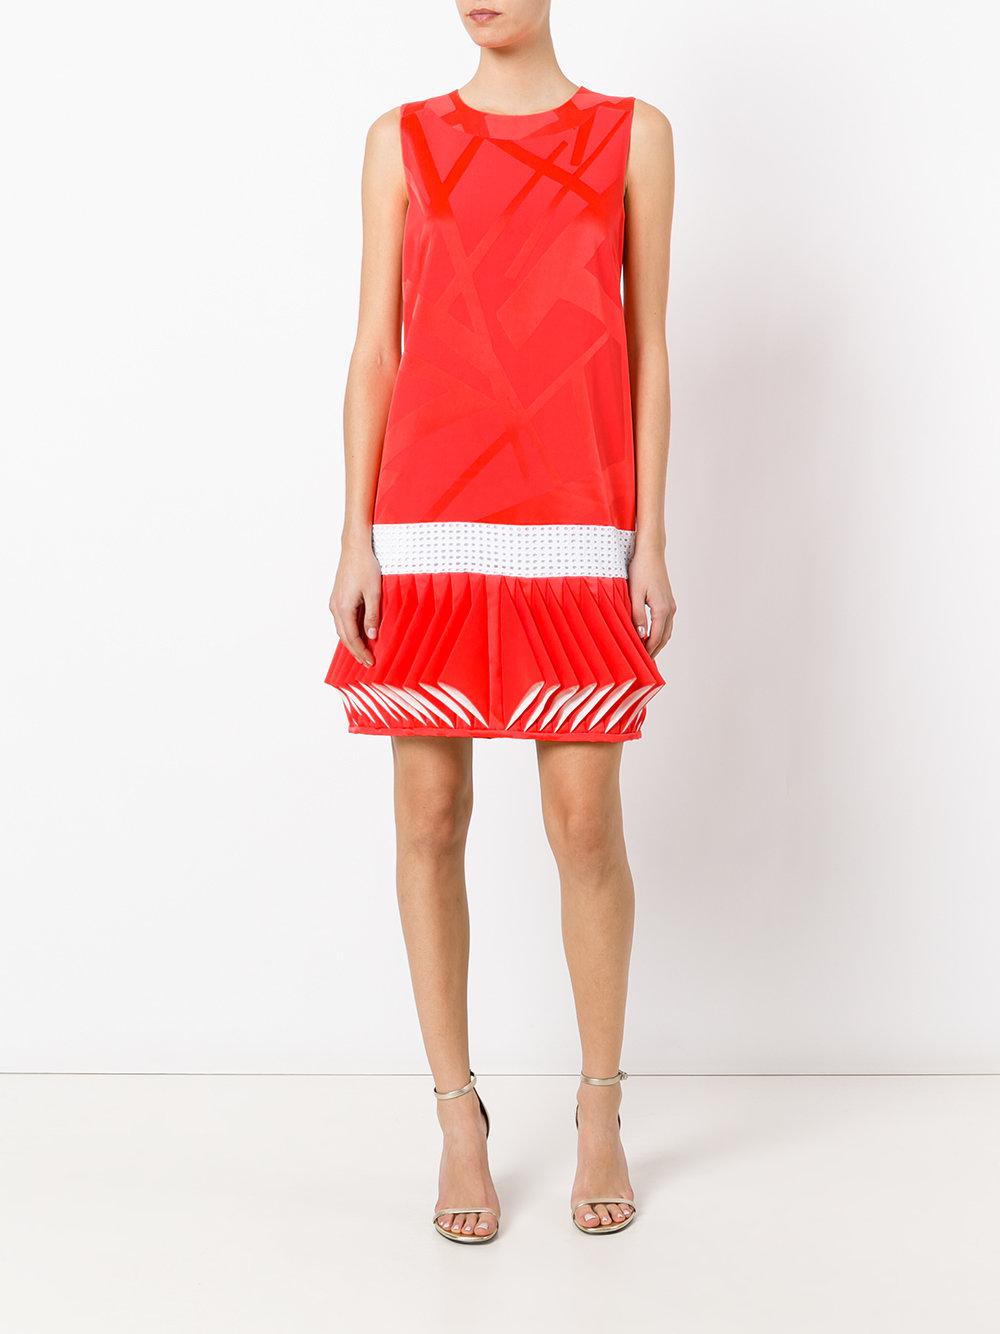 Lyst - Capucci Abito Folded Hem Dress in Red